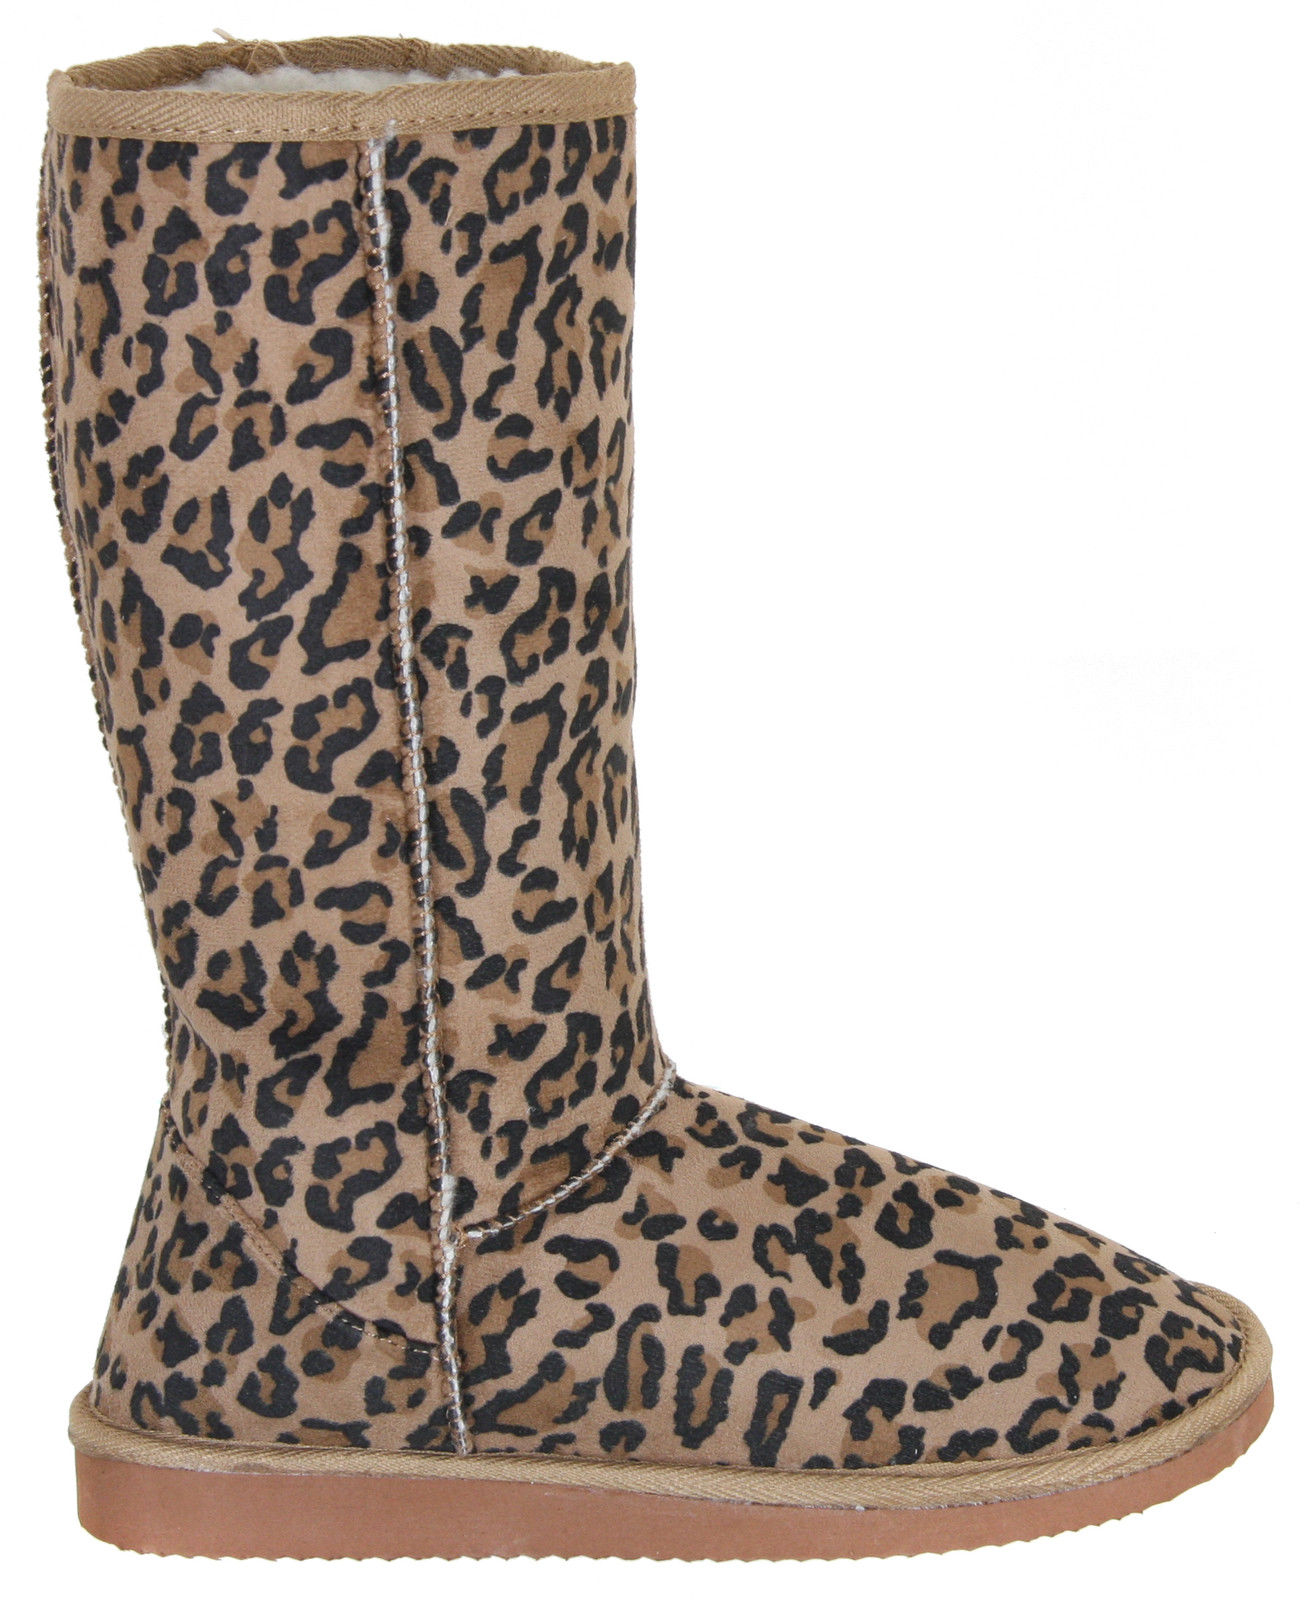 leopard boots for women